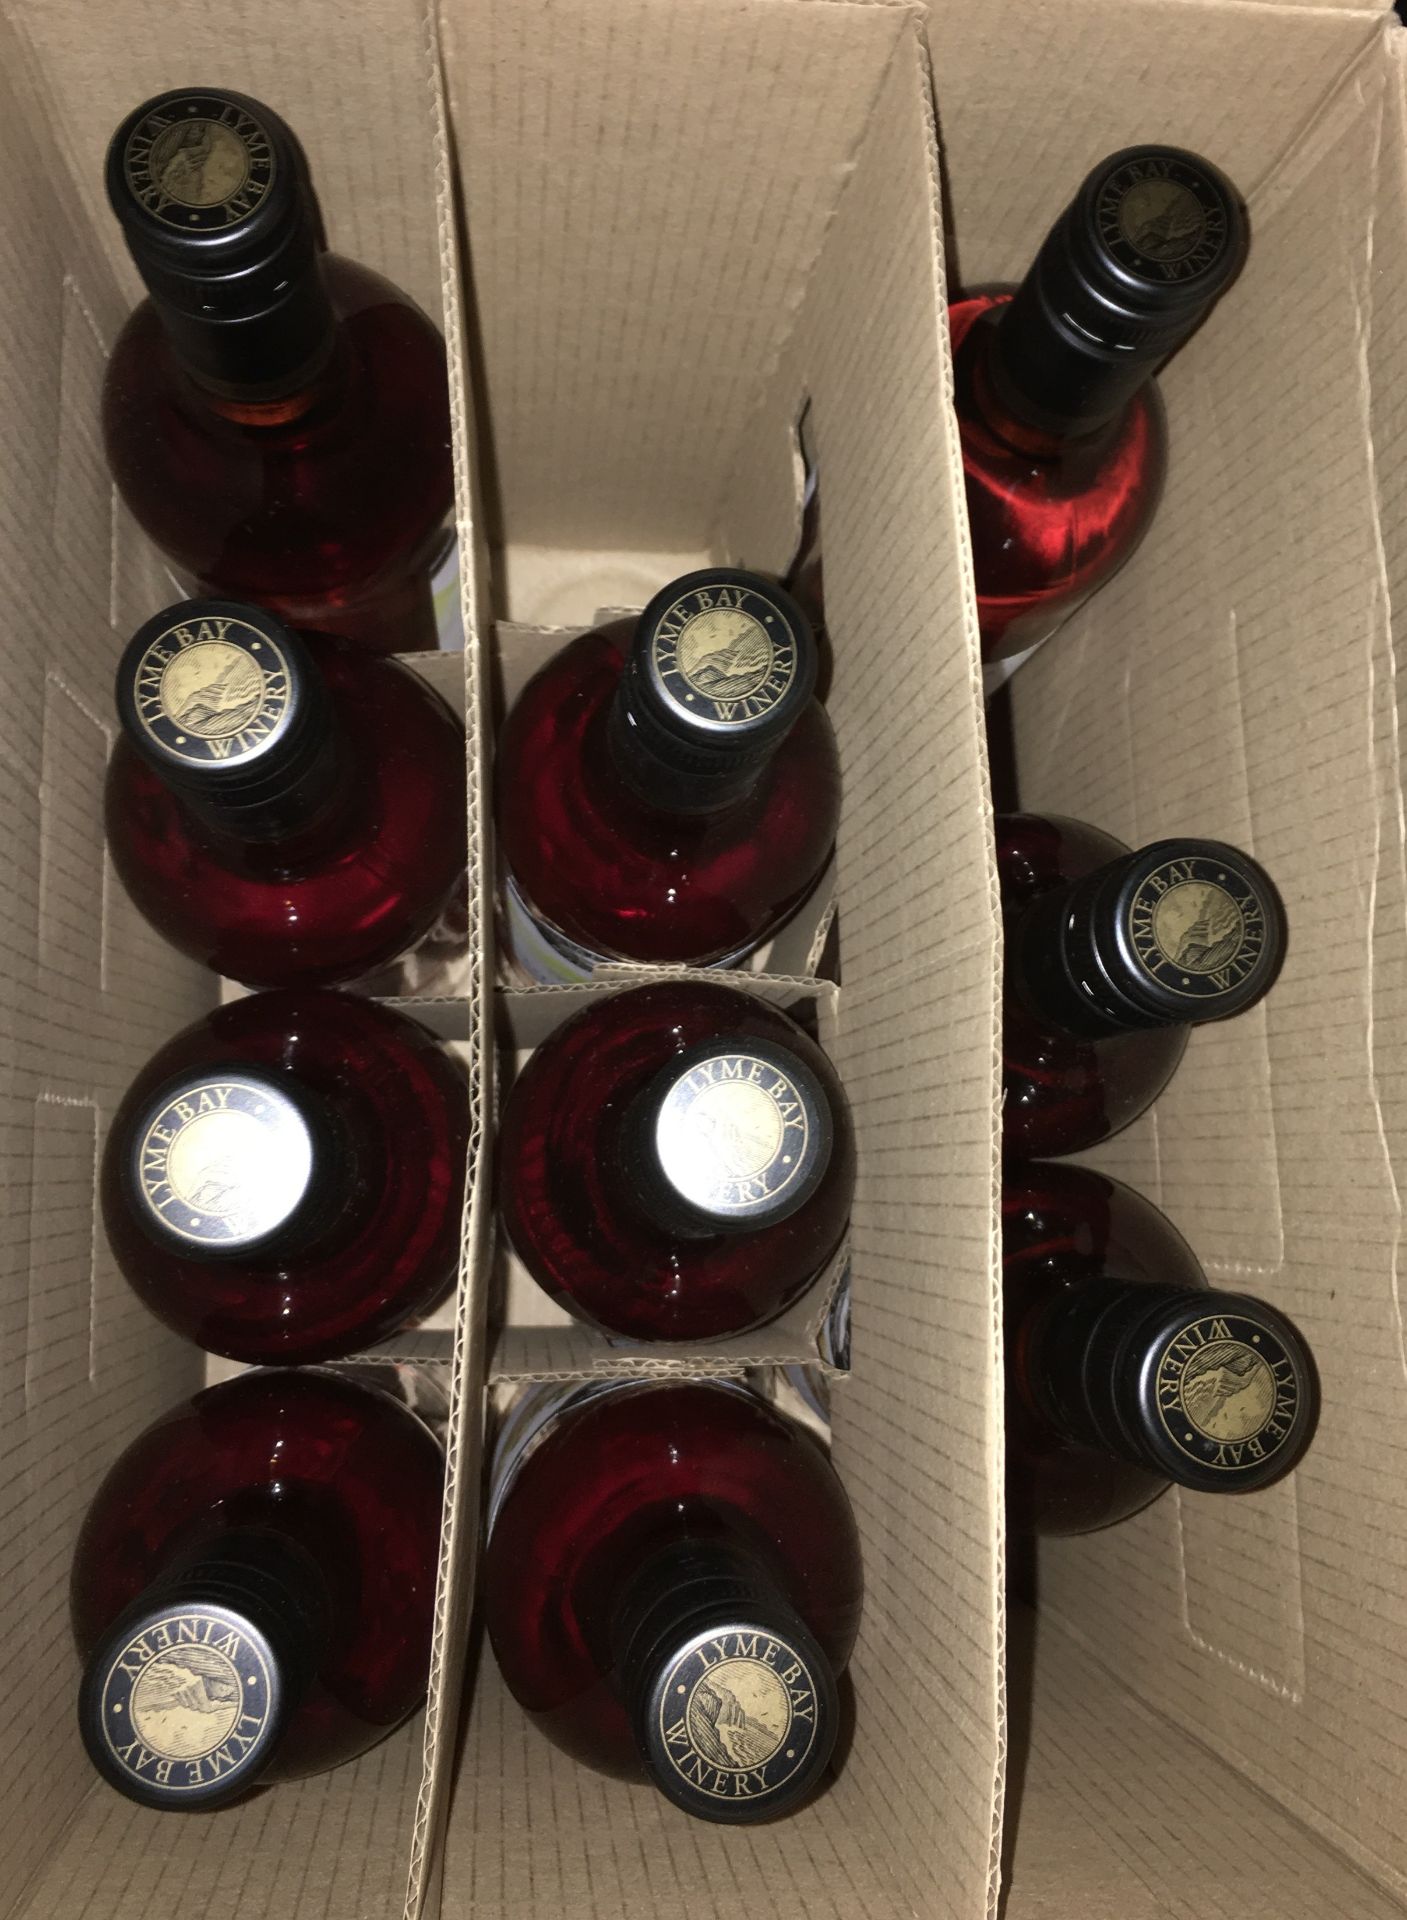 10 x 750ml Bottles Of Lyme Bay Mulled Wine | RRP £9.95 per bottle